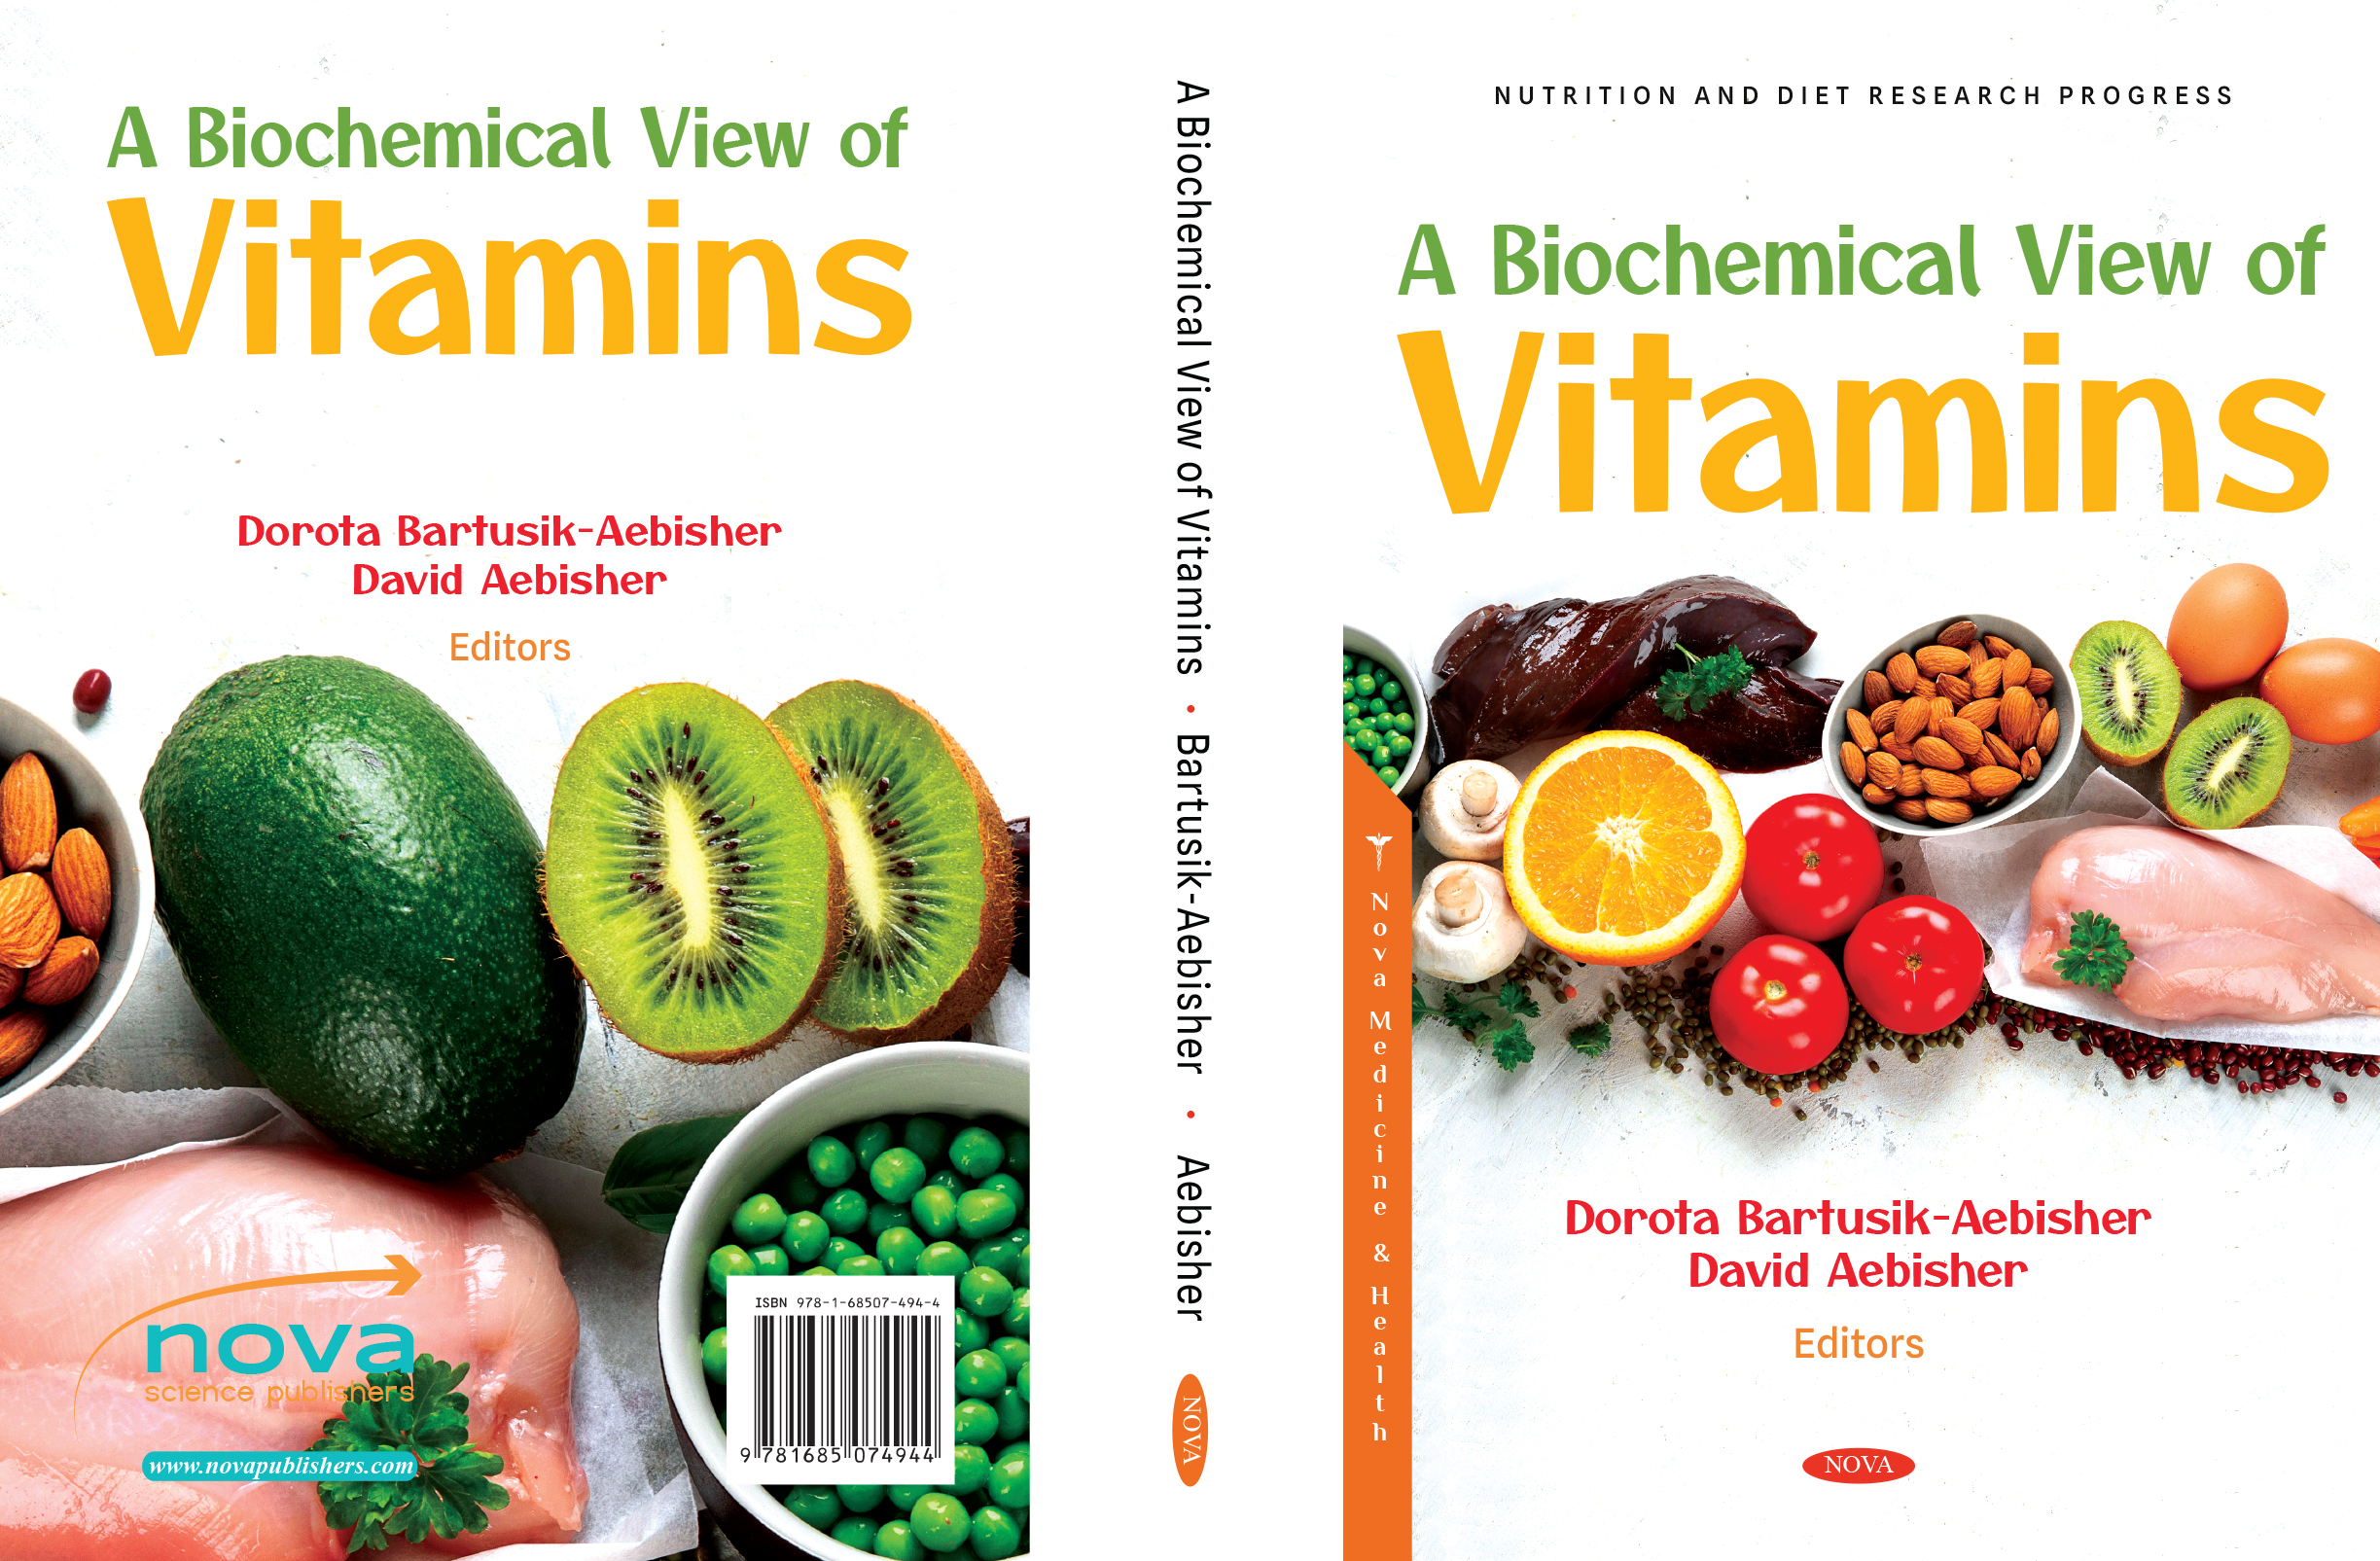 A Biochemical View of Vitamins 978-1-68507-494-4.jpg [2.52 MB]